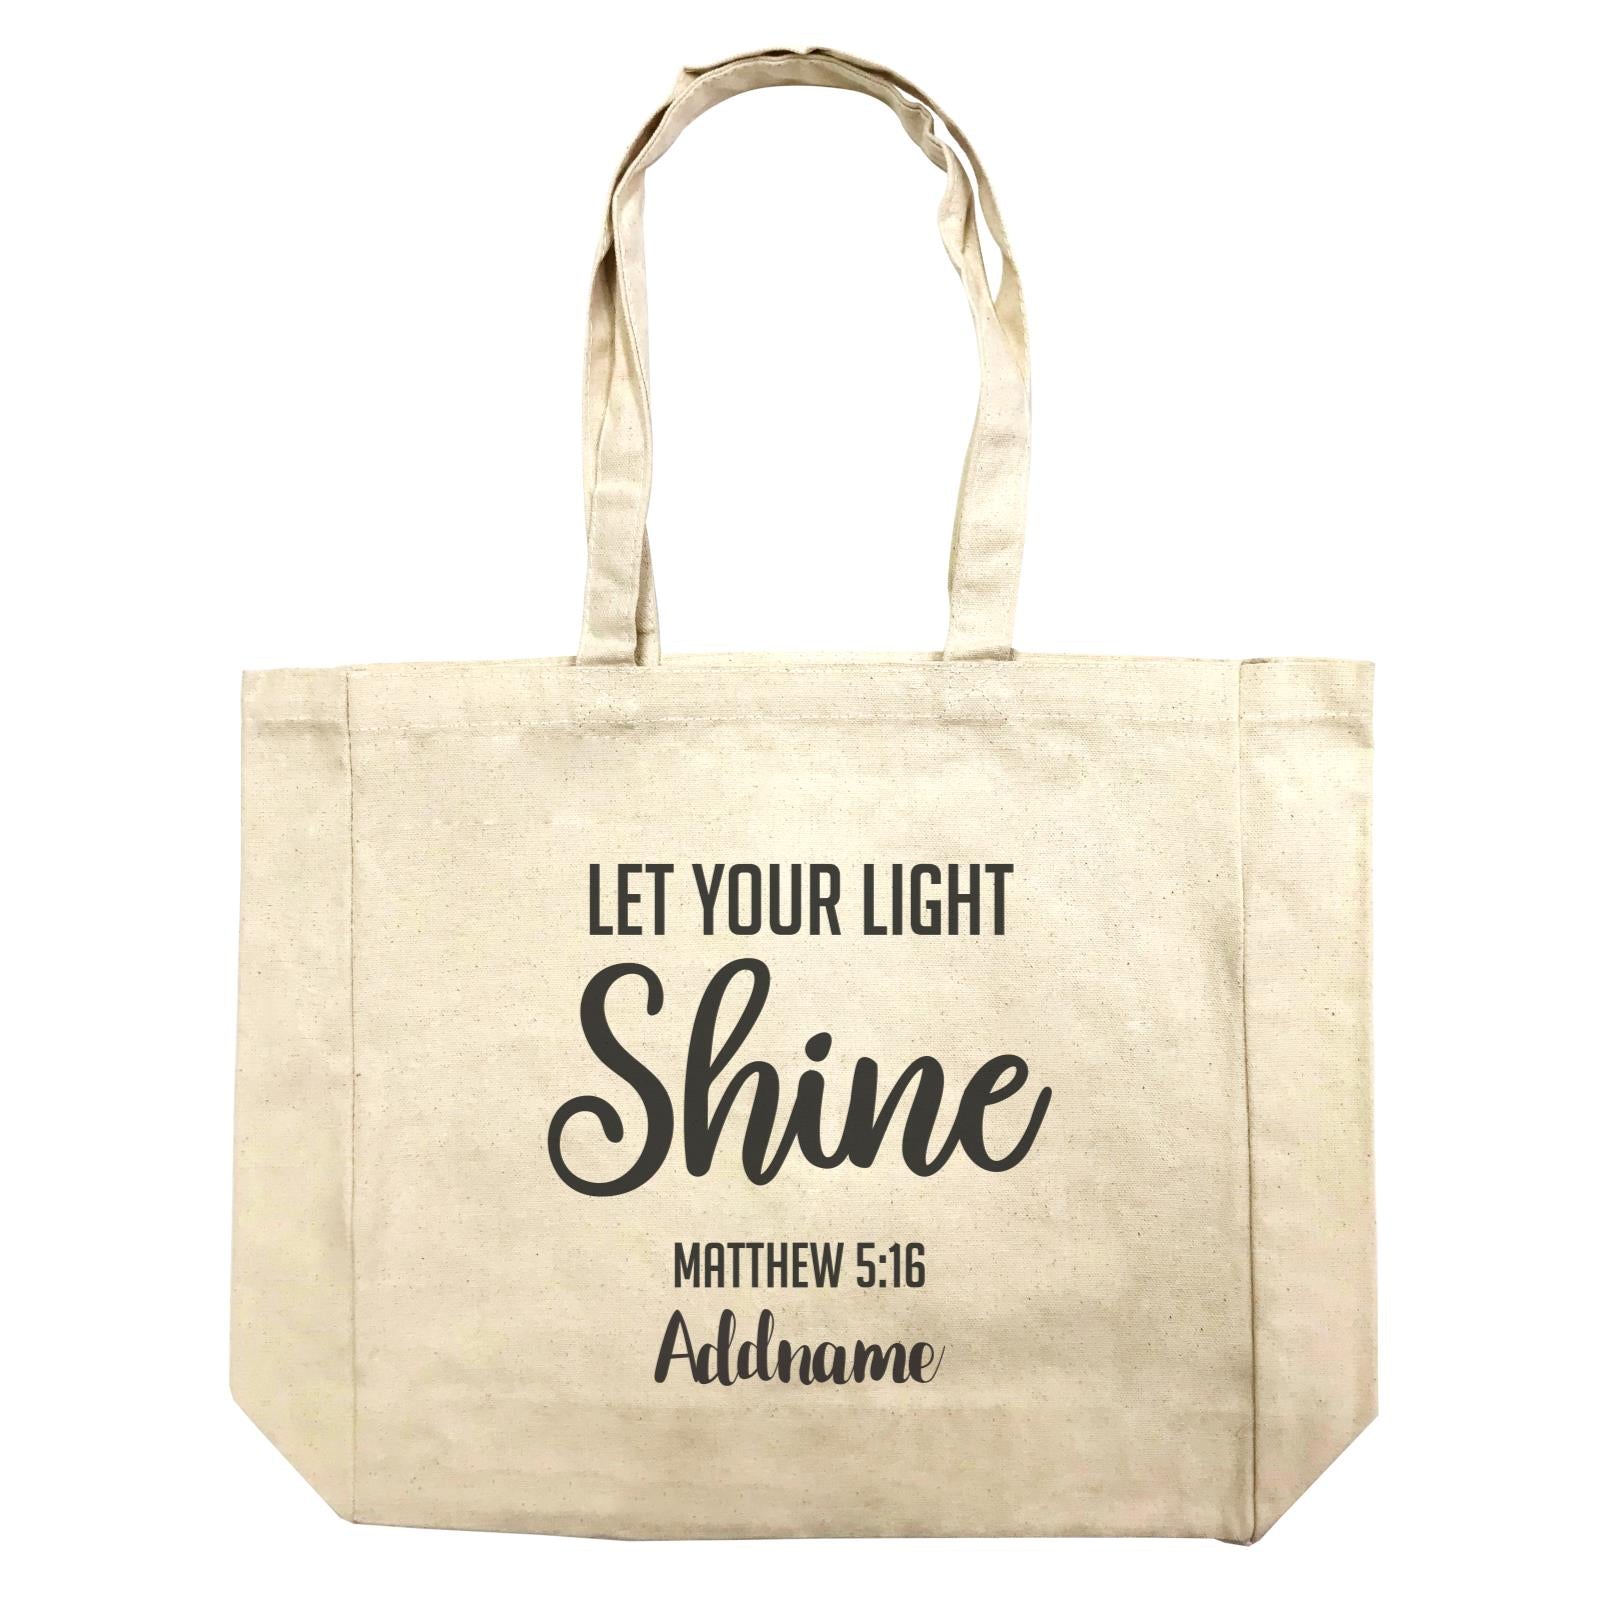 Christian Series Let Your Light Shine Matthew 5.16 Addname Shopping Bag